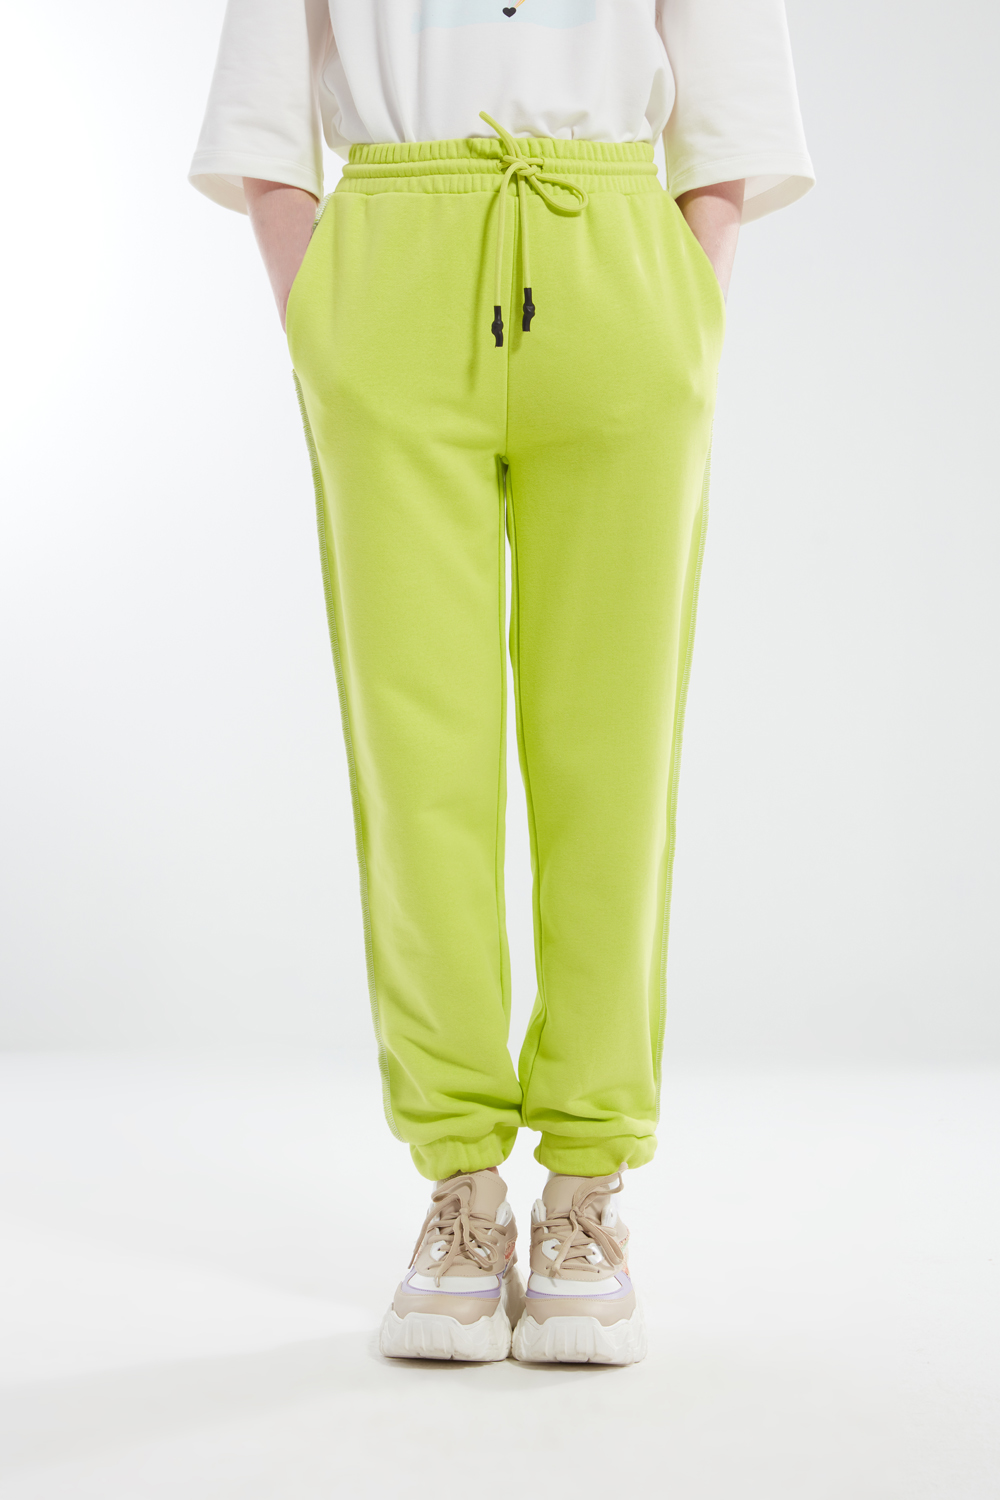 Shirt Stitched Neon Green Sweatpants